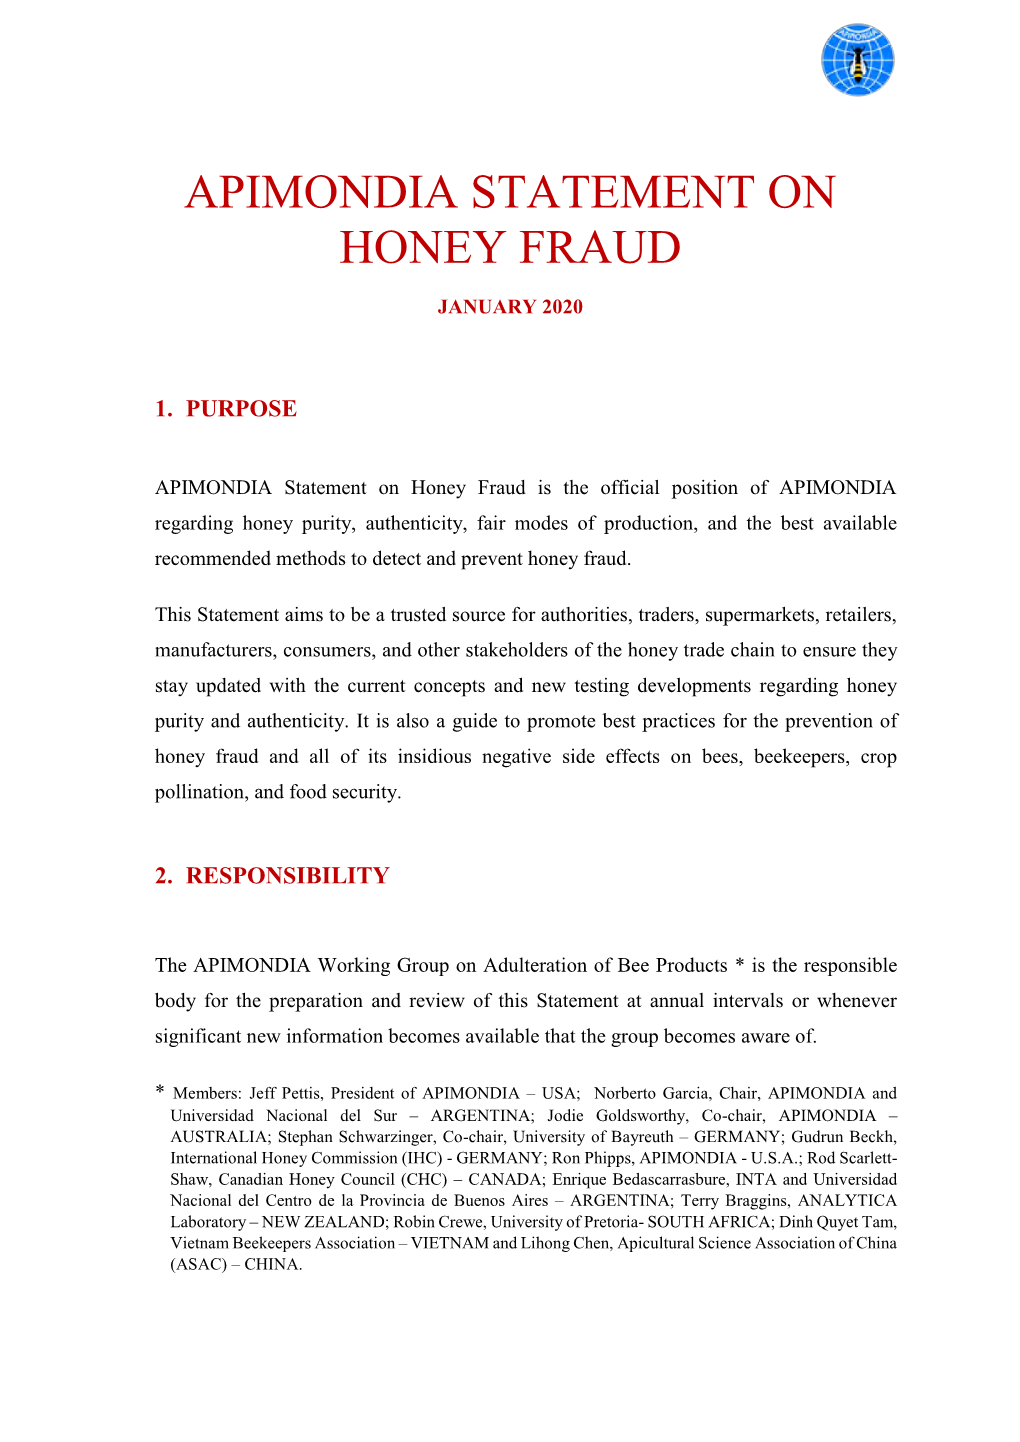 Apimondia Statement on Honey Fraud